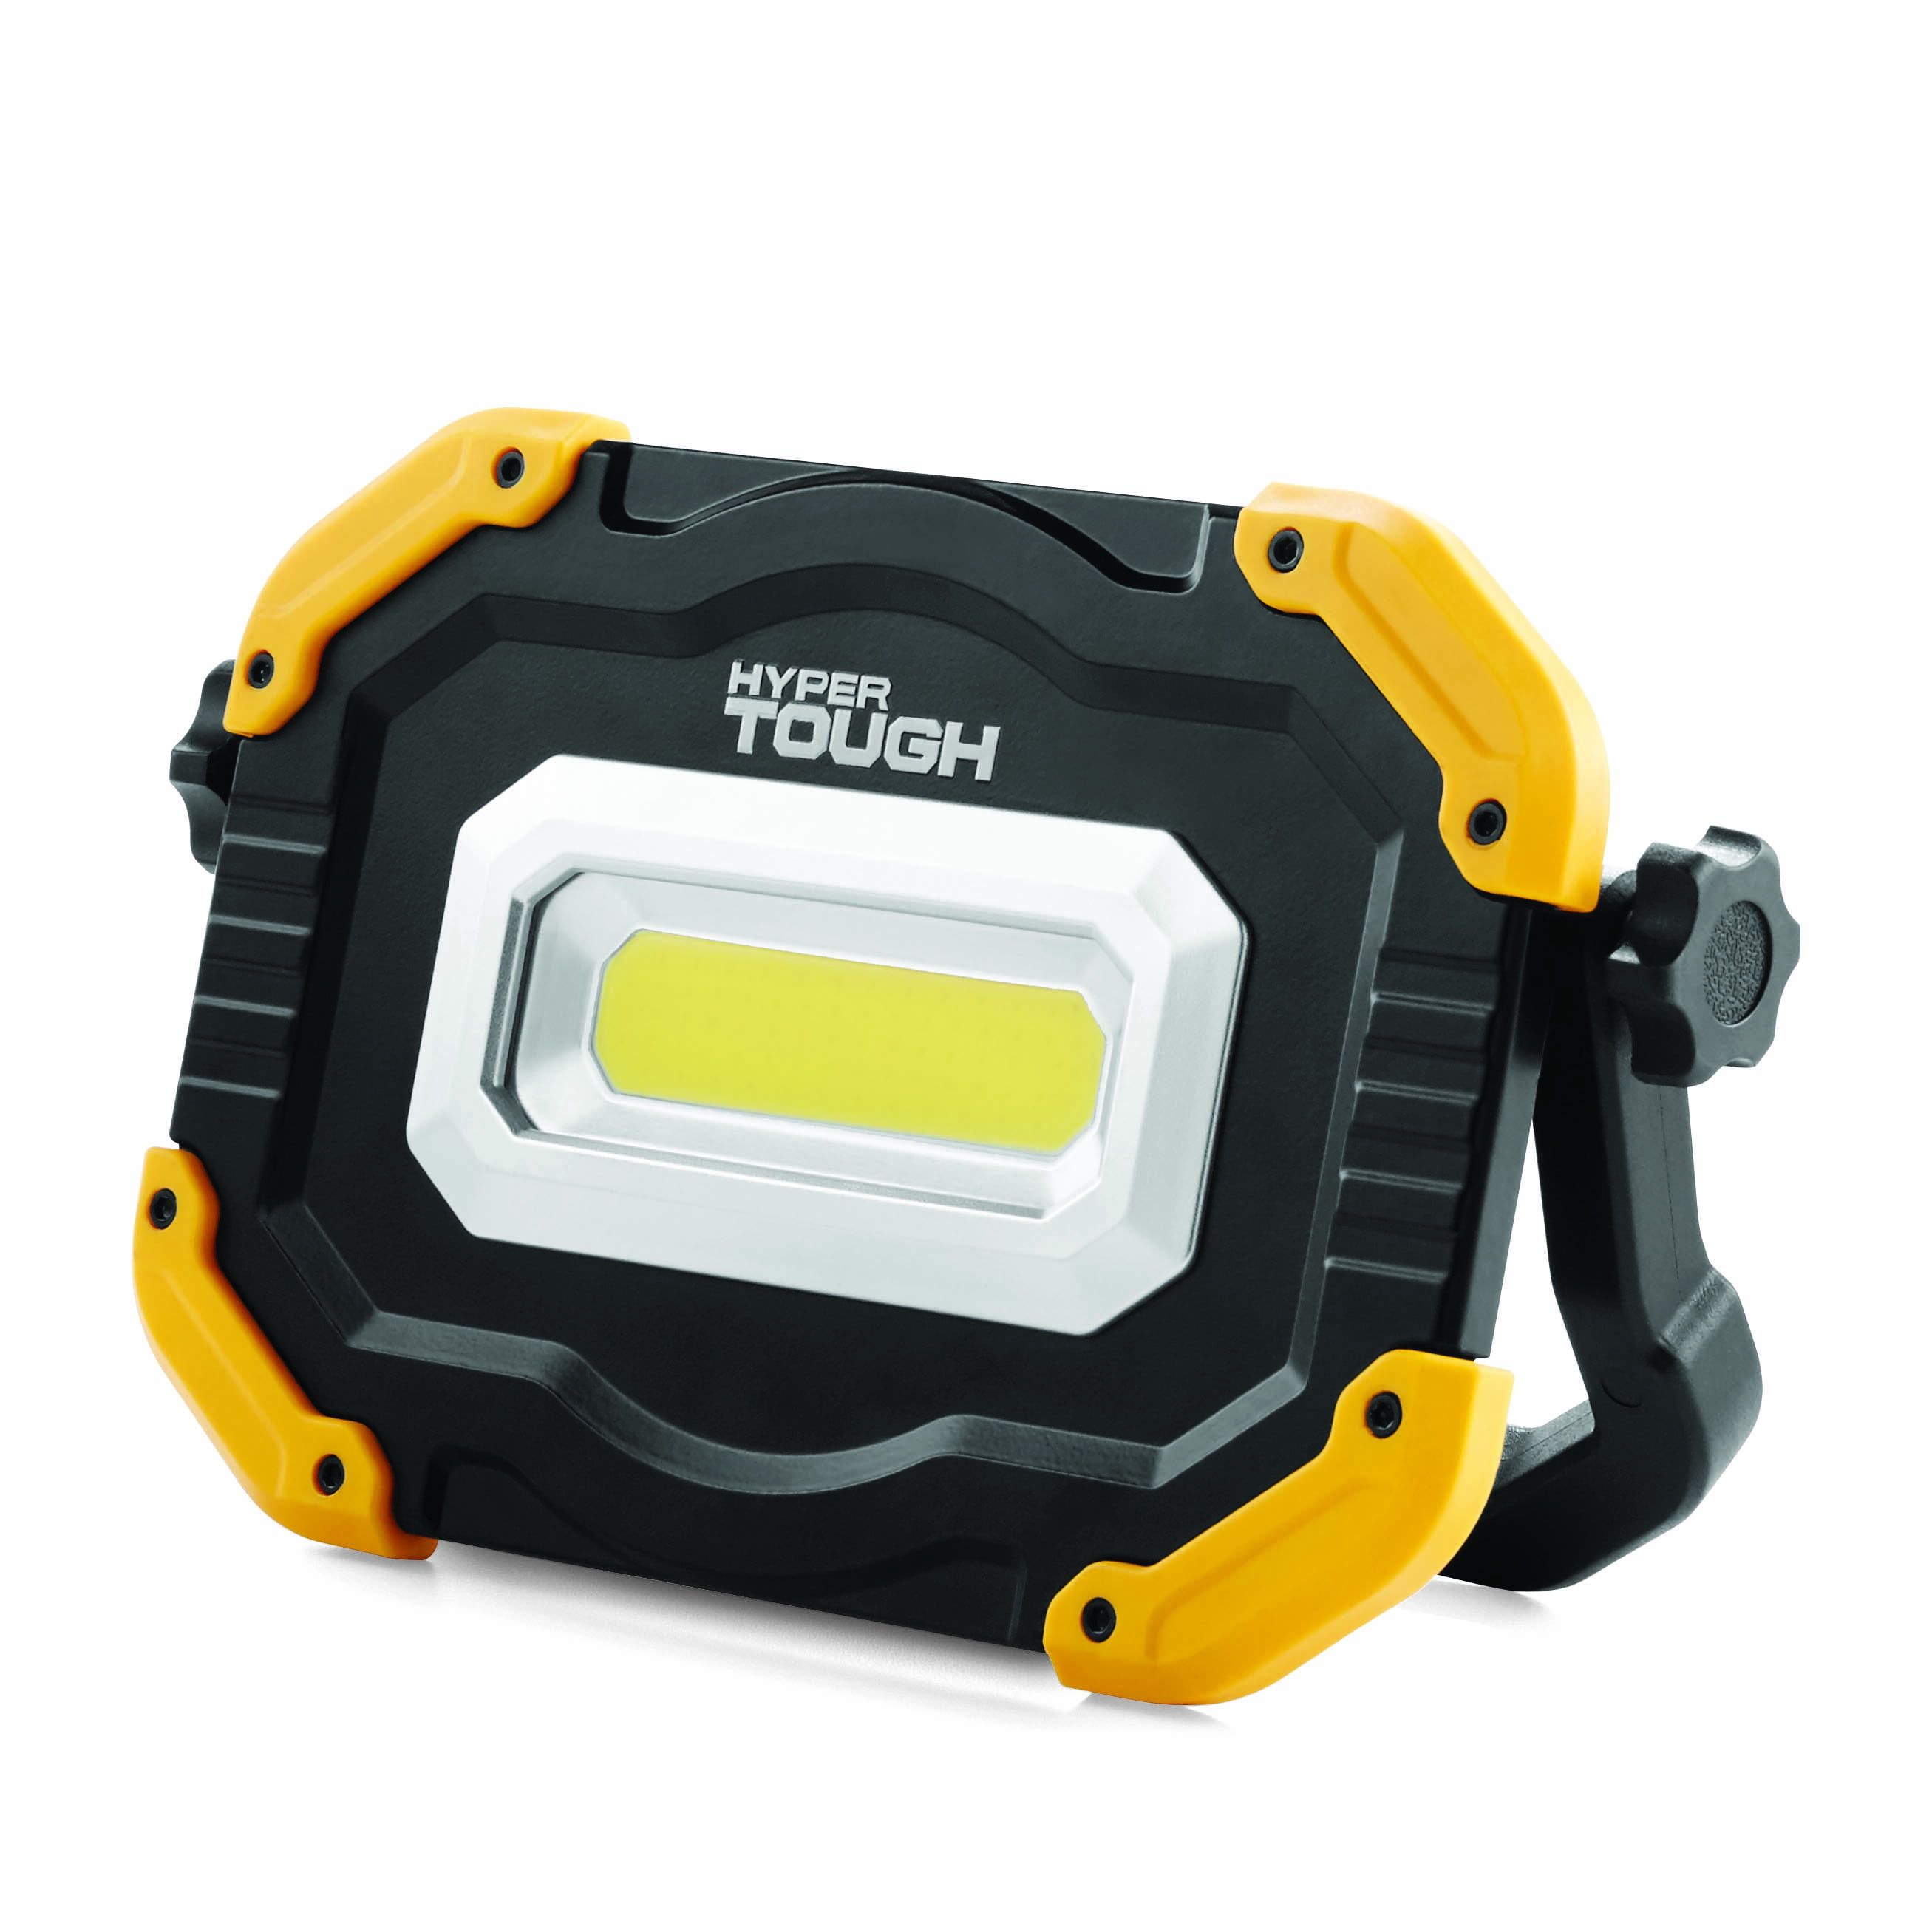 Hyper Tough 2500 Lumen LED Rechargeable Work Light, Yellow, Black, Model 7046